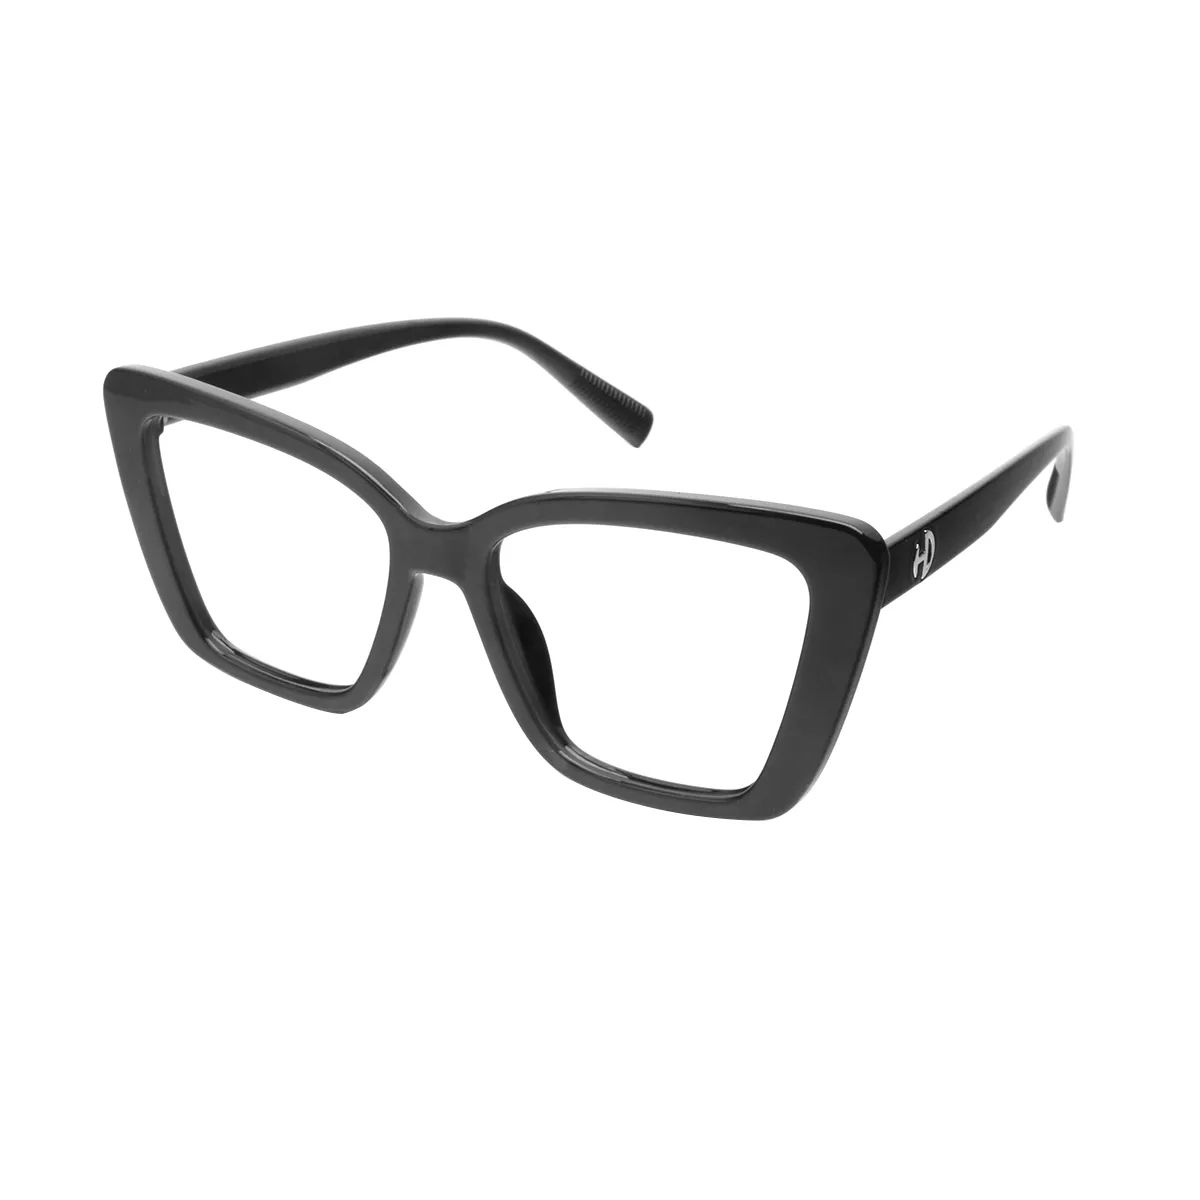 Cordelia - Square Black Glasses for Women